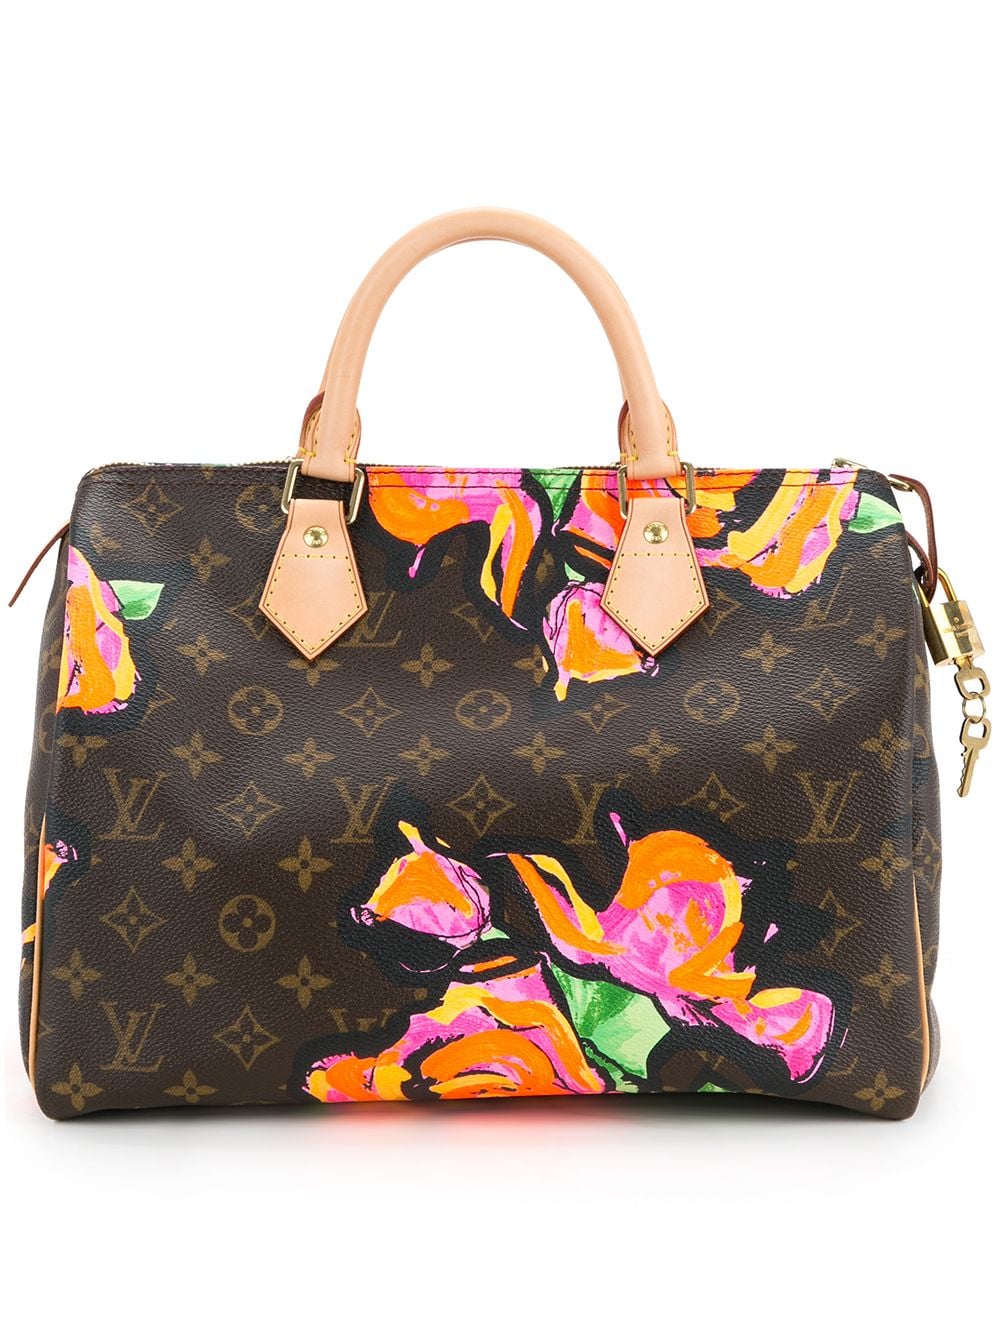 Louis Vuitton Speedy 30 Rose Stephen Sprouse Brown Monogram Handbag Great Condition (LCZX) 144020002564 TS